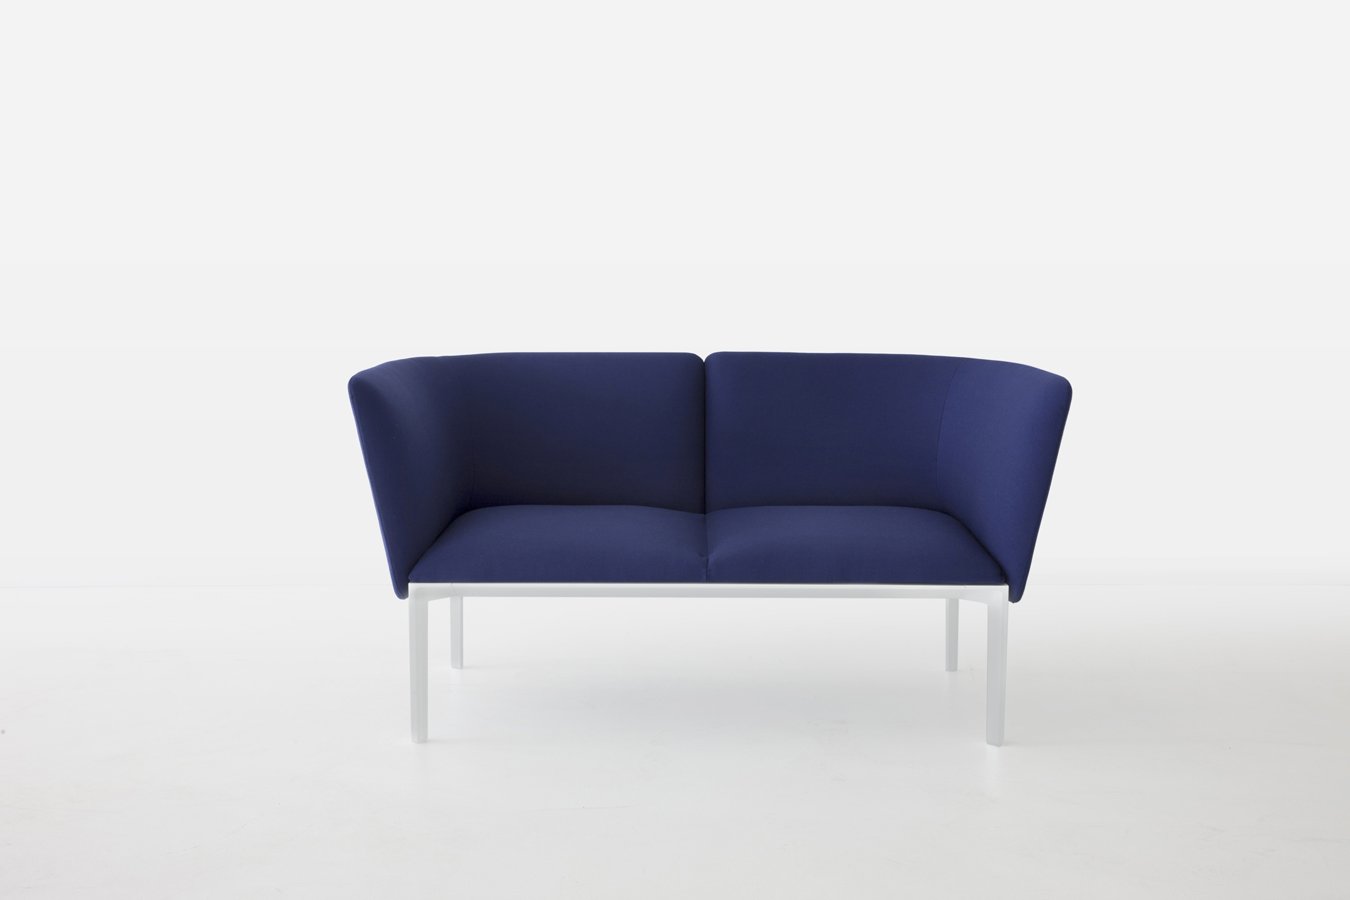 Add Modular Sofa from lapalma, designed by Francesco Rota